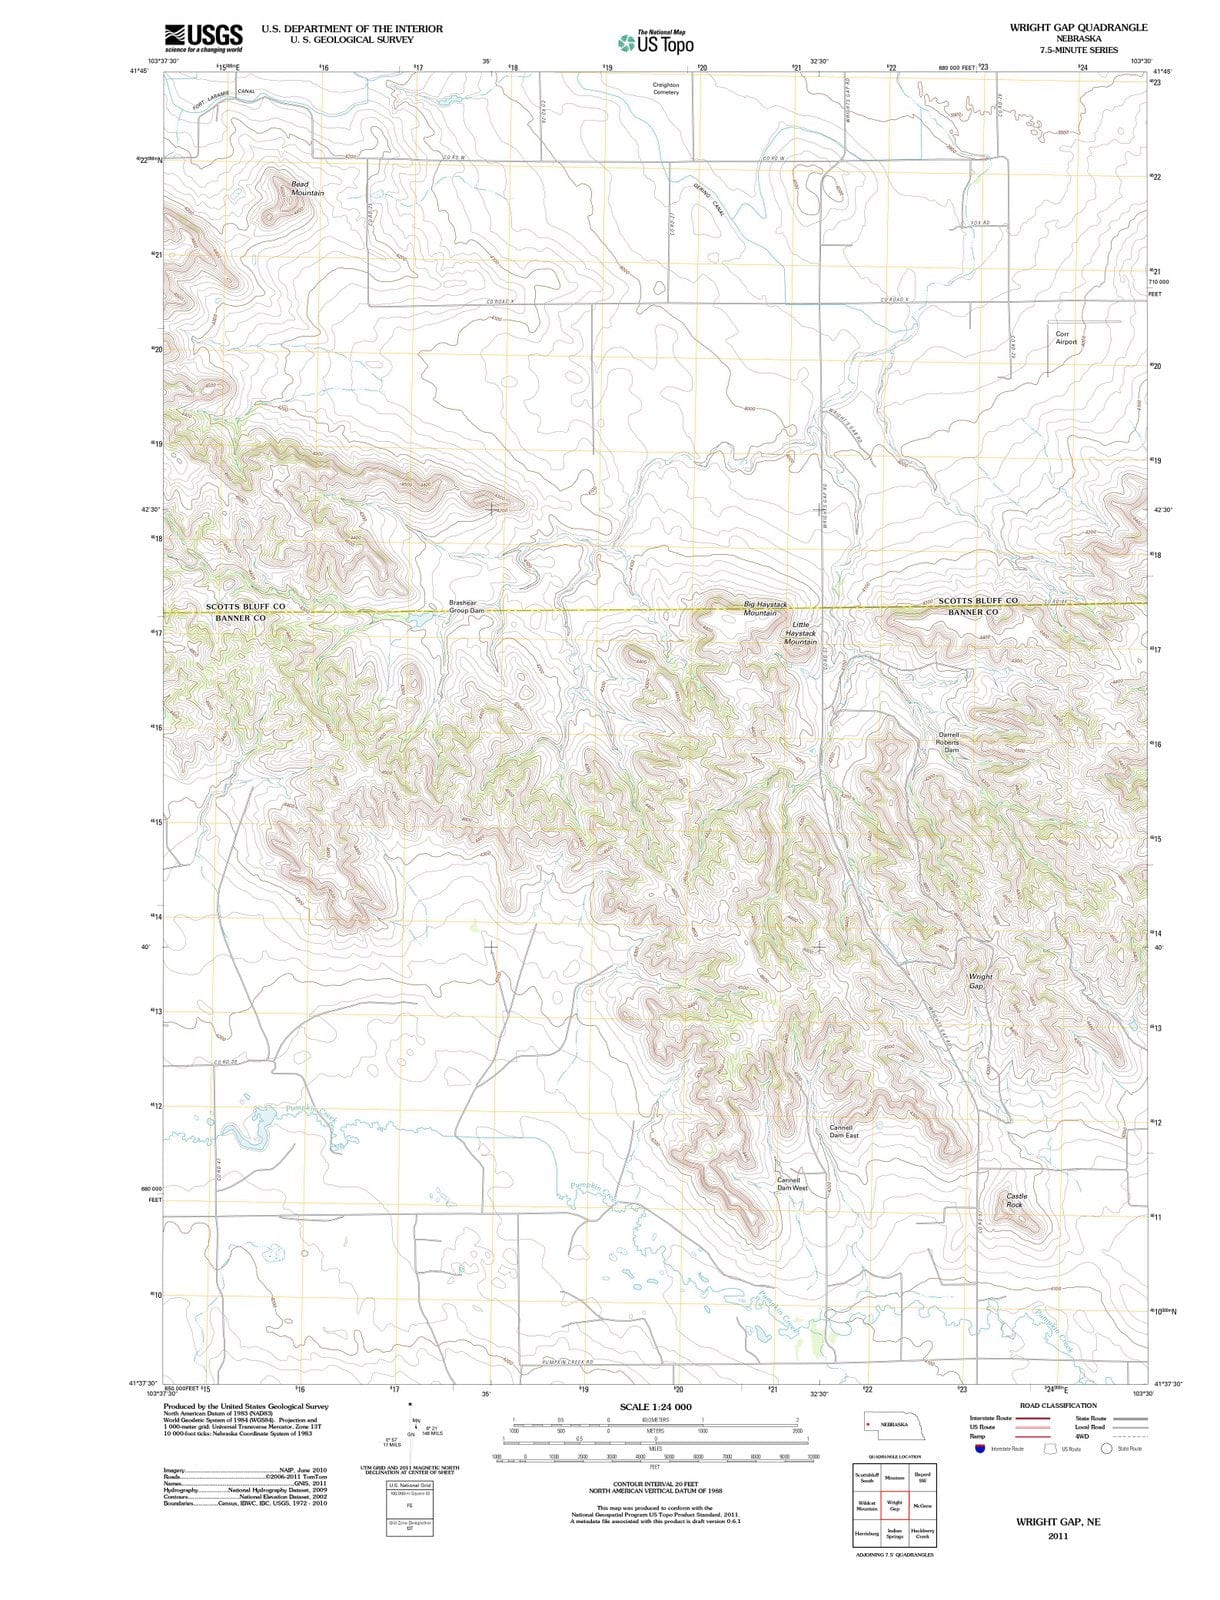 2011 Wright Gap, NE - Nebraska - USGS Topographic Map